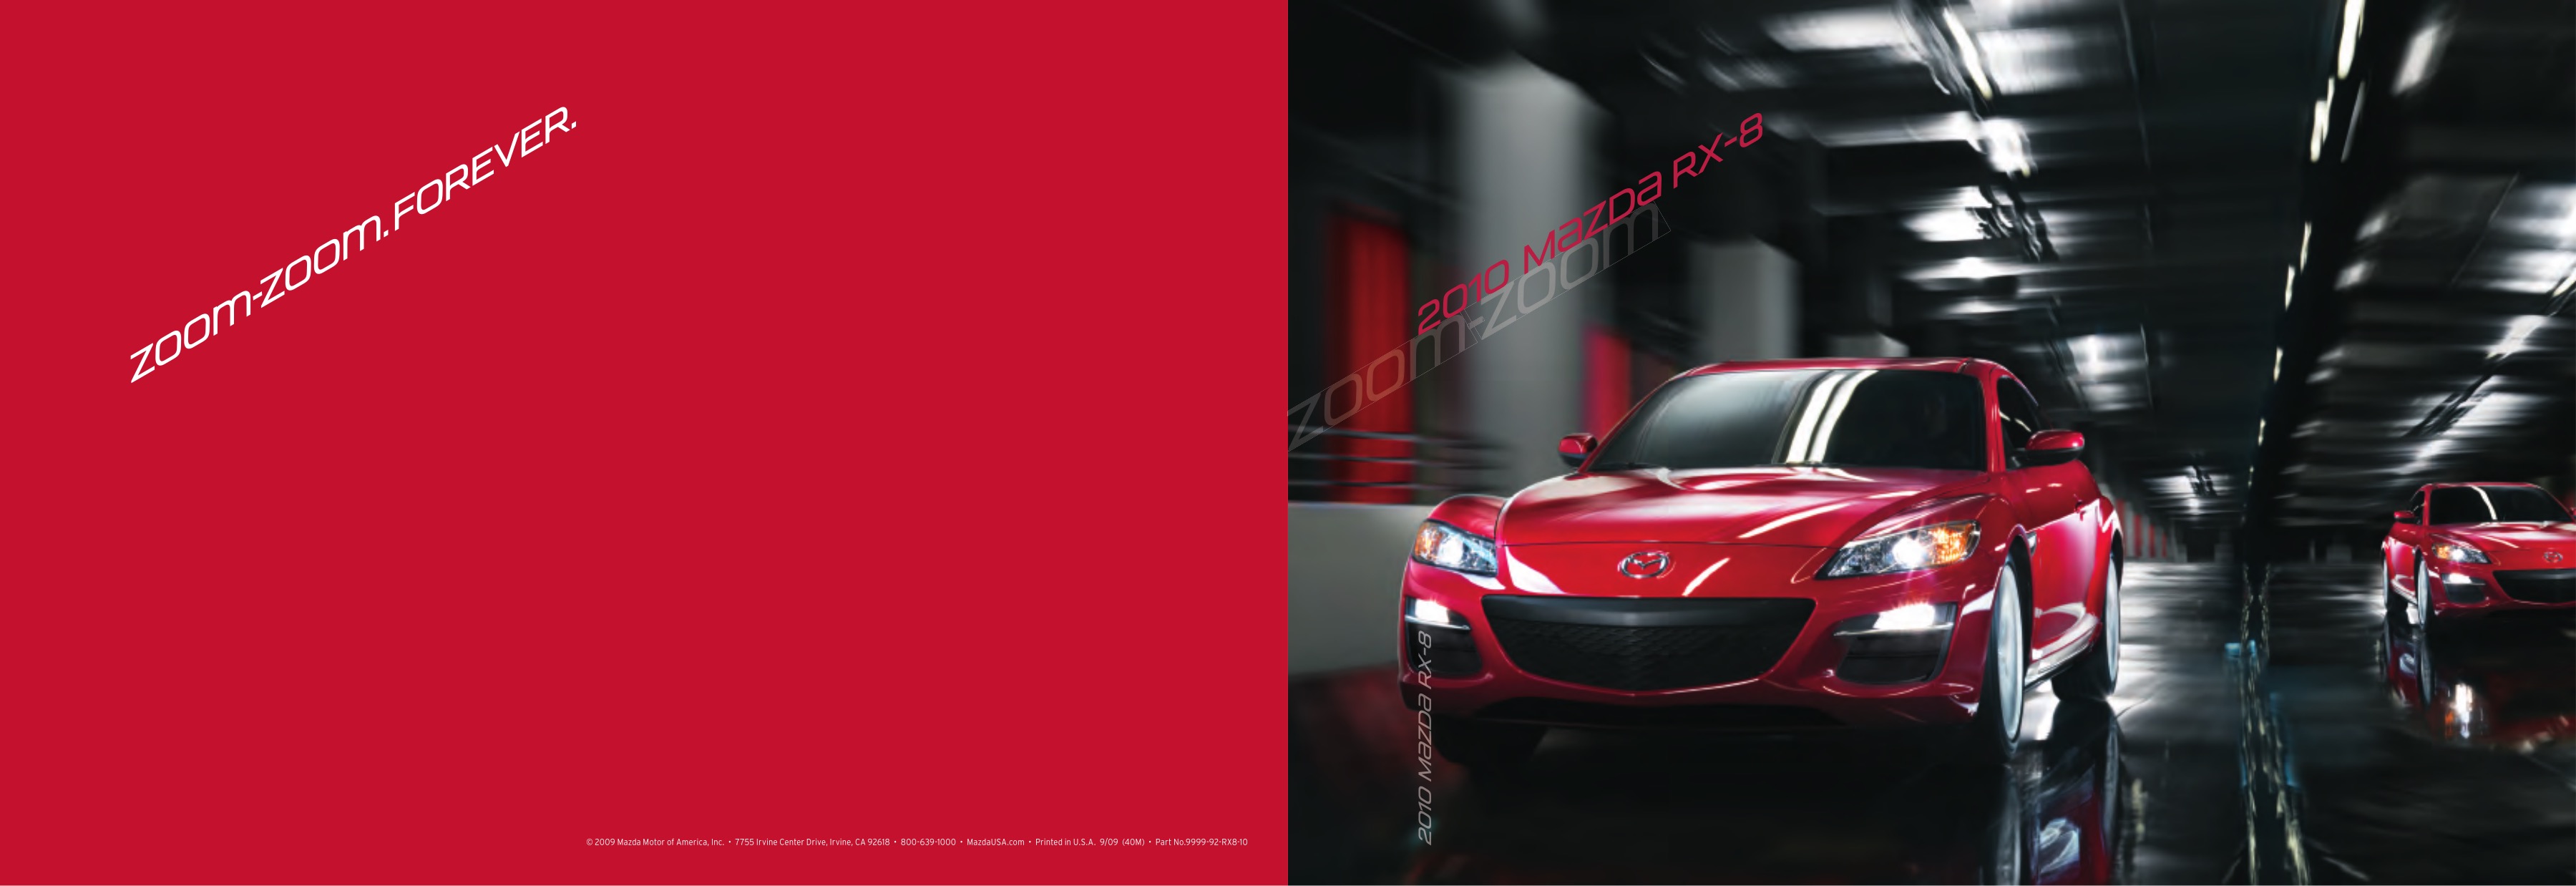 2010 Mazda RX-8 Brochure